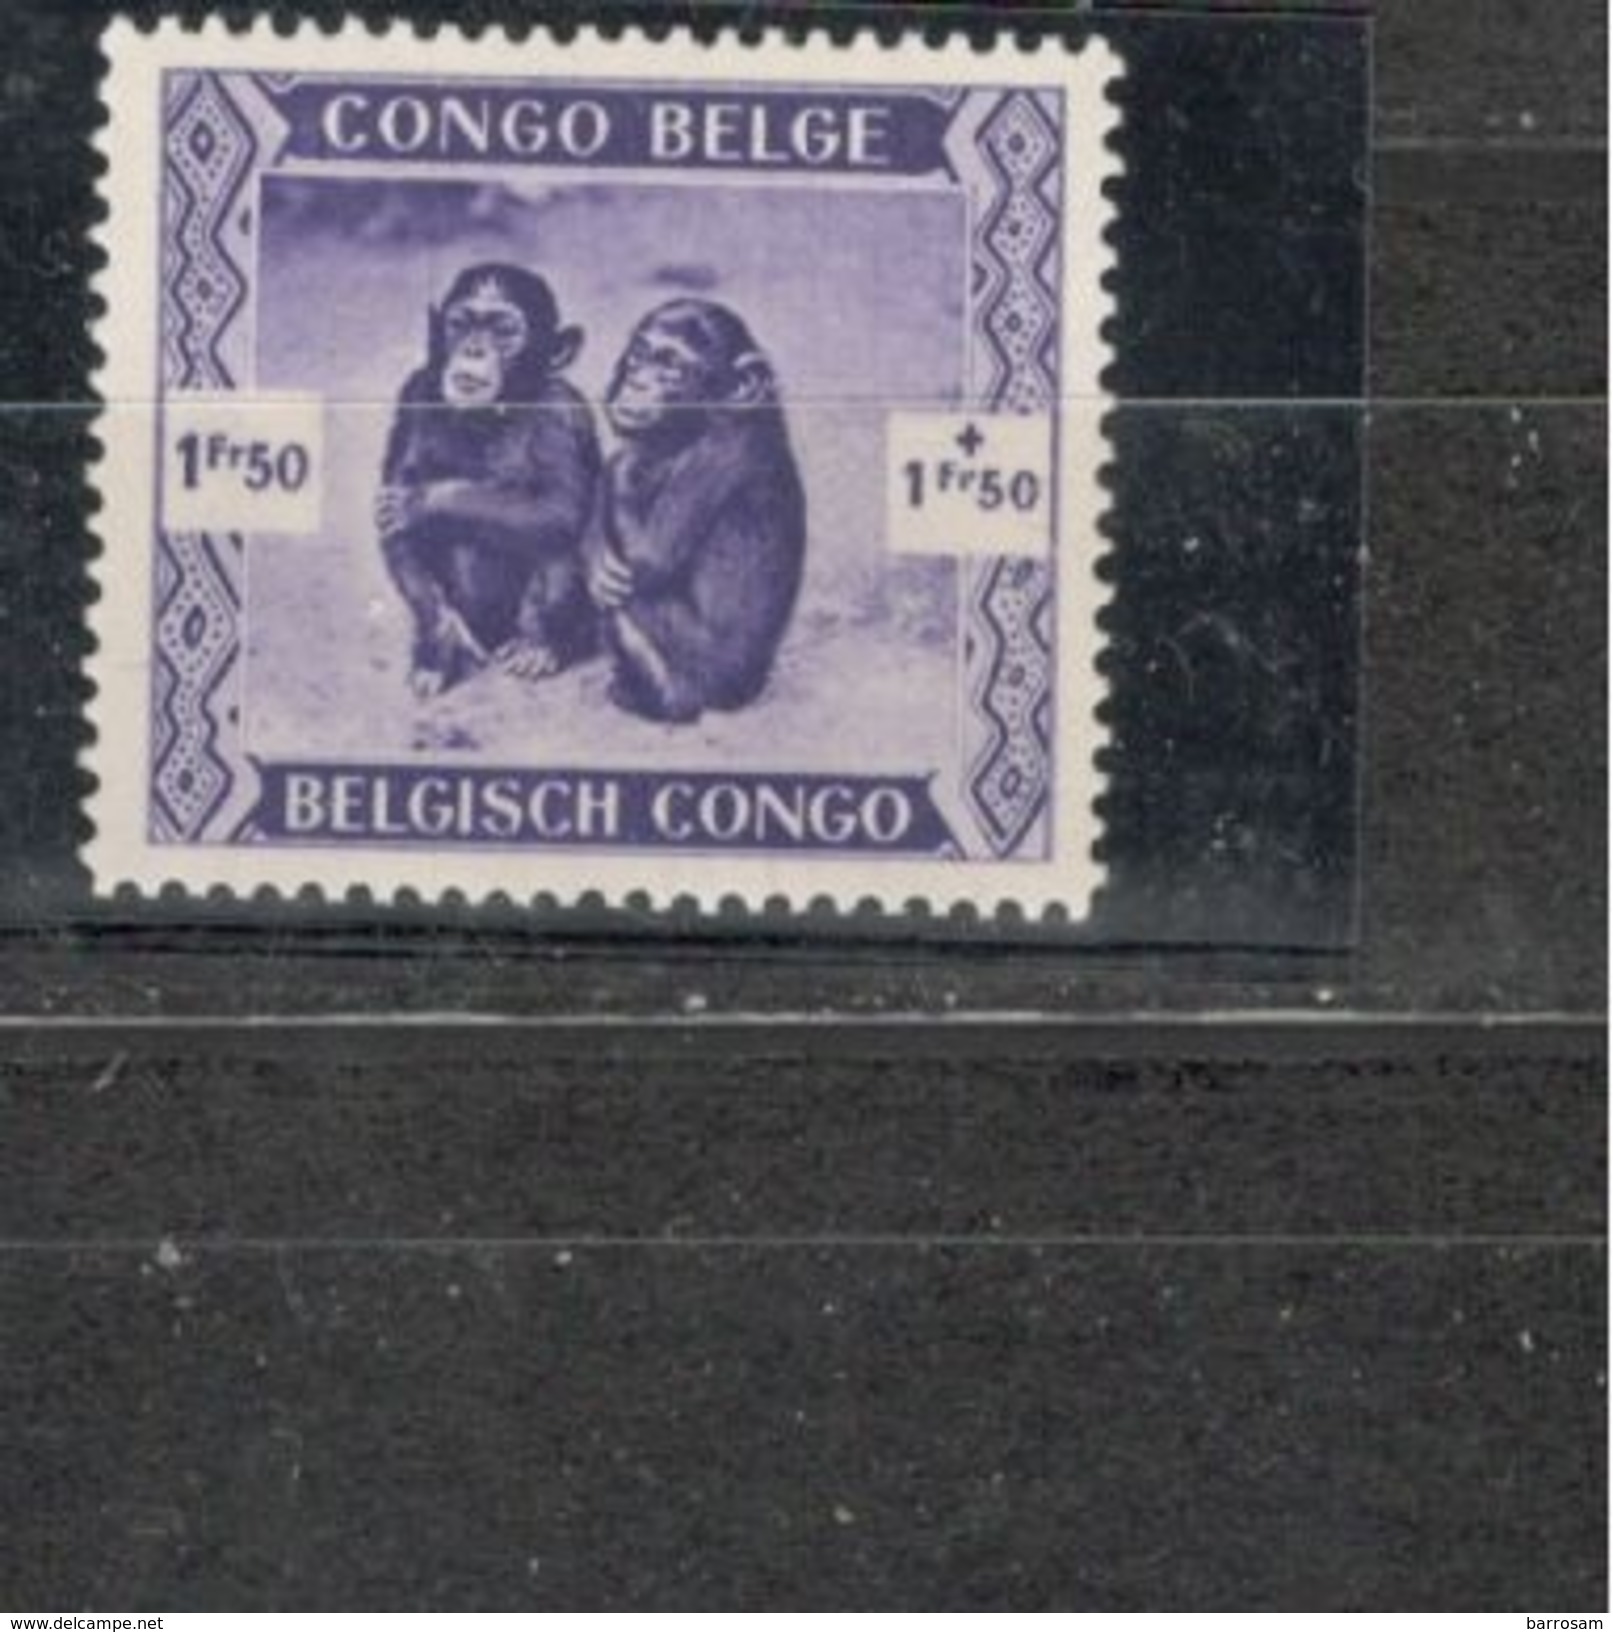 BelgianCongo1939: ScottB29mnh** CHIMPANZEE - Chimpanzés